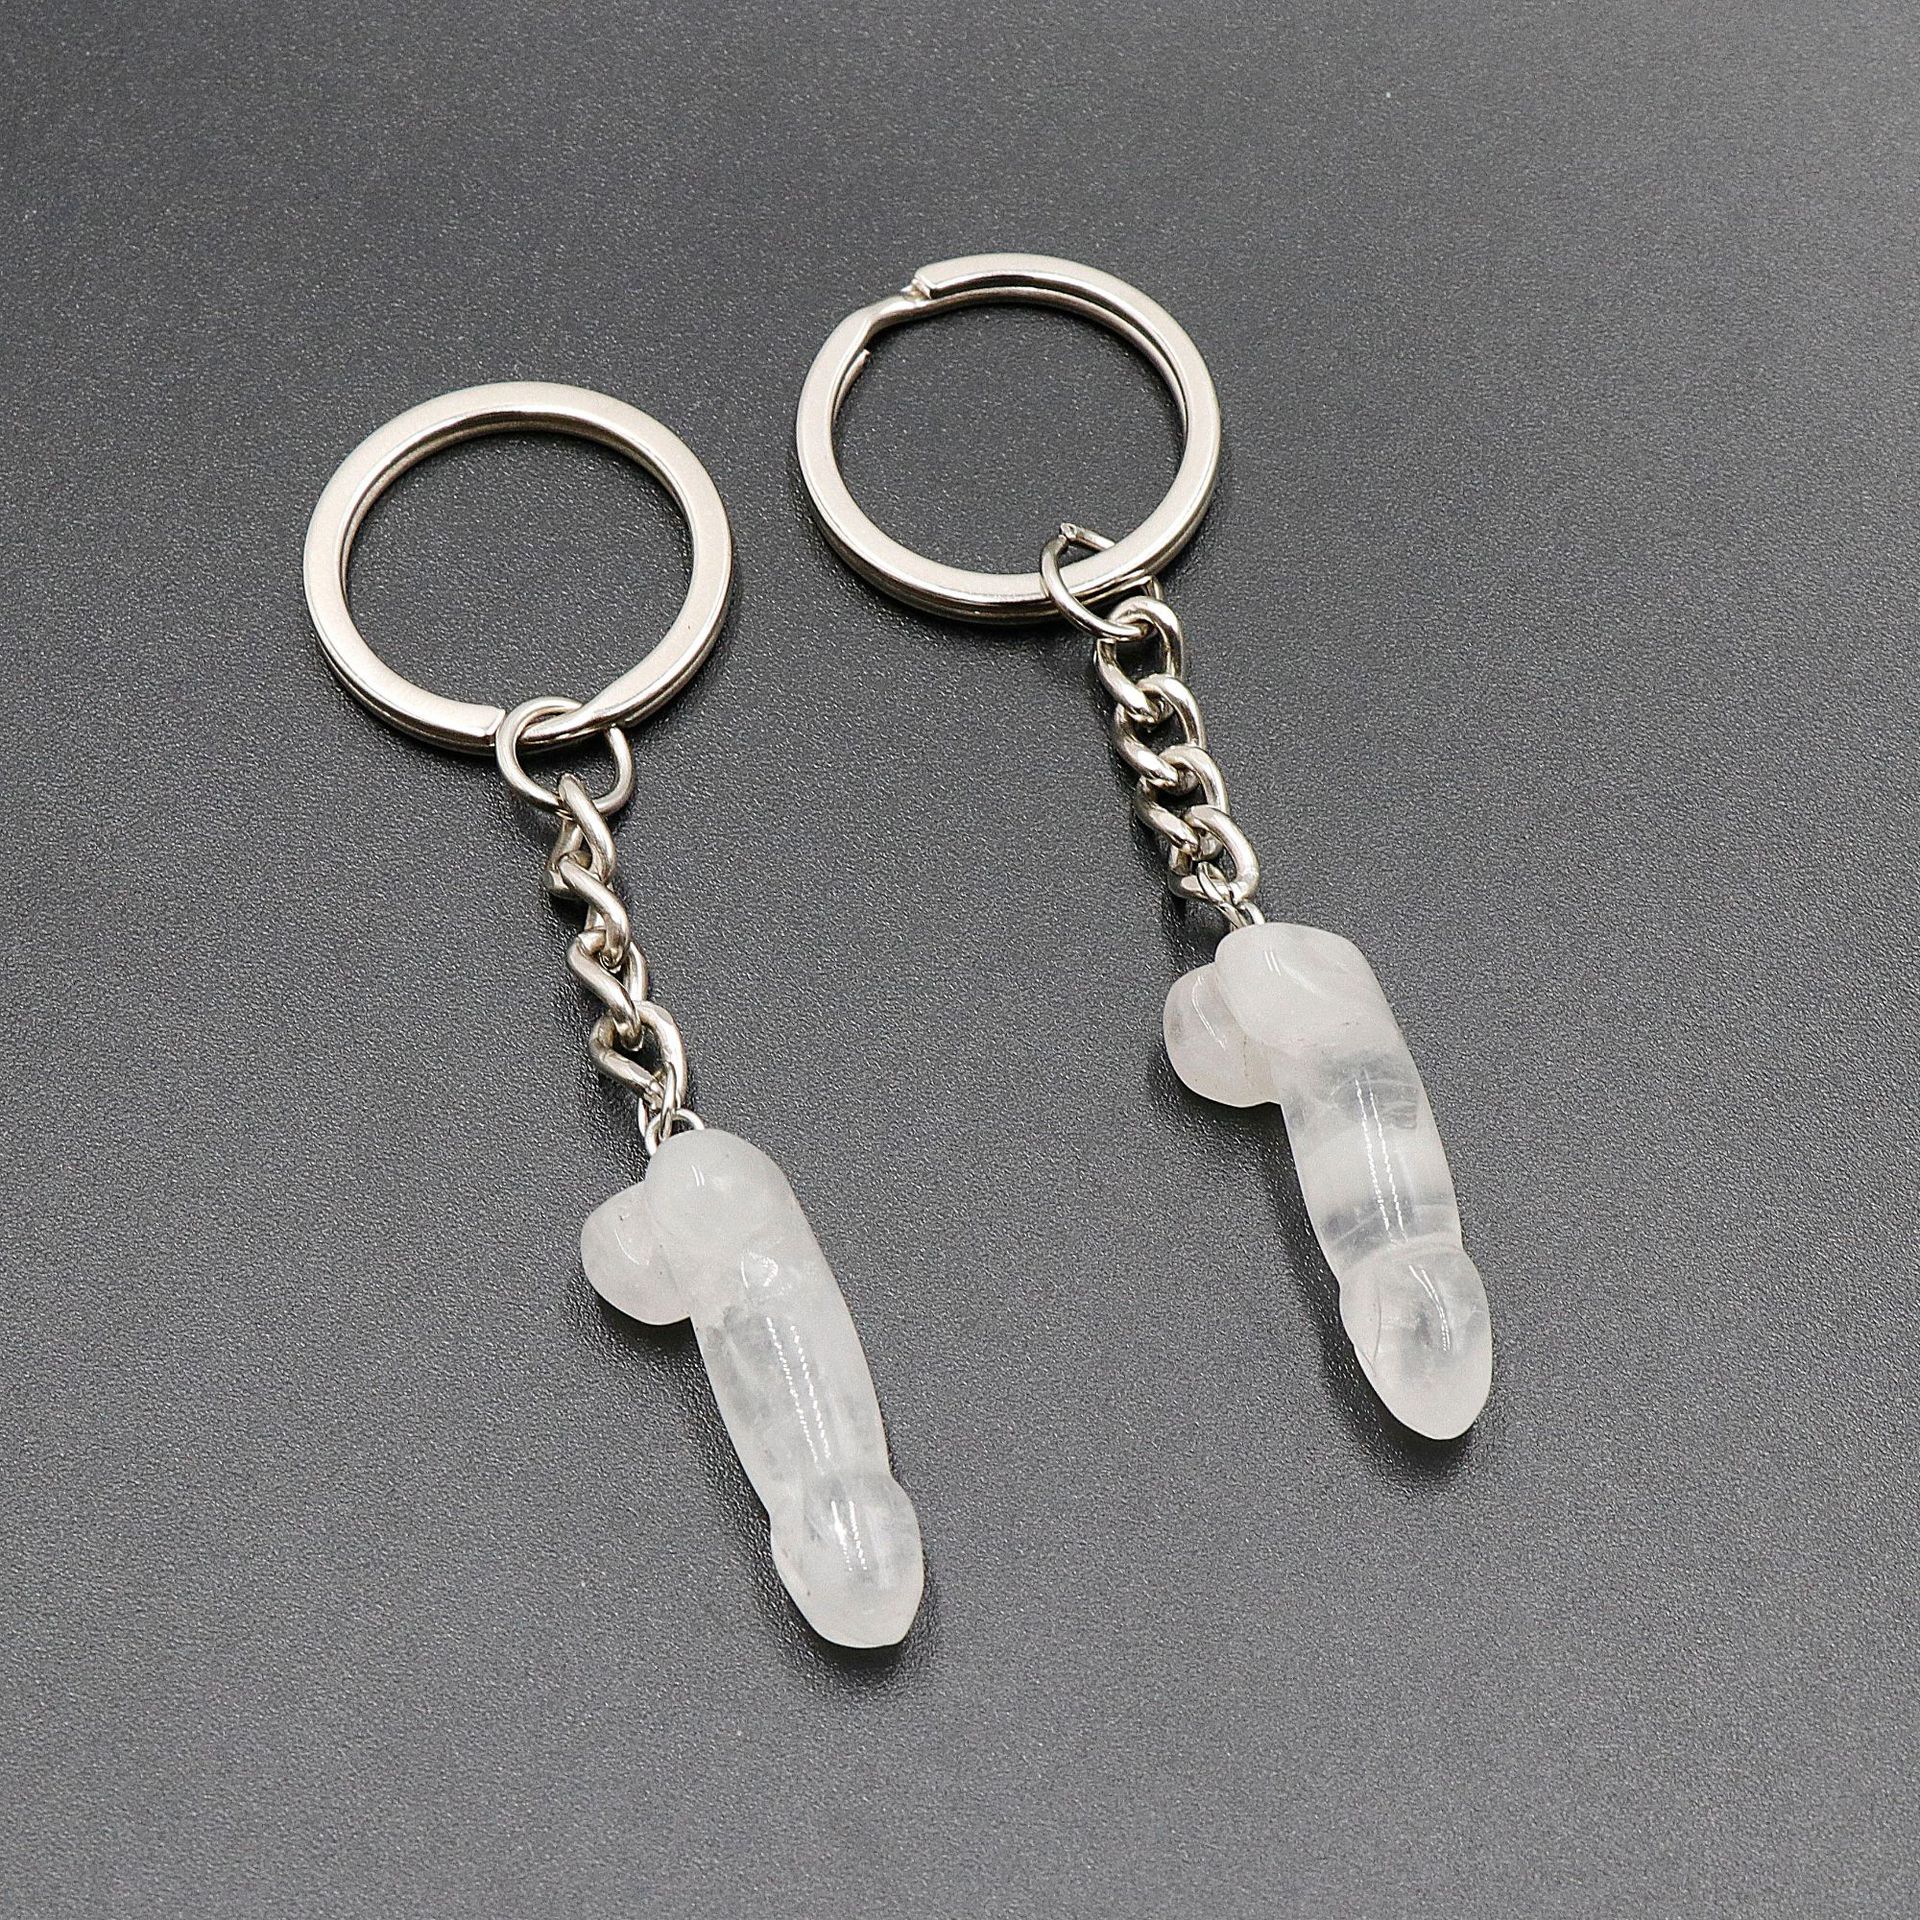 6:White crystal key chain